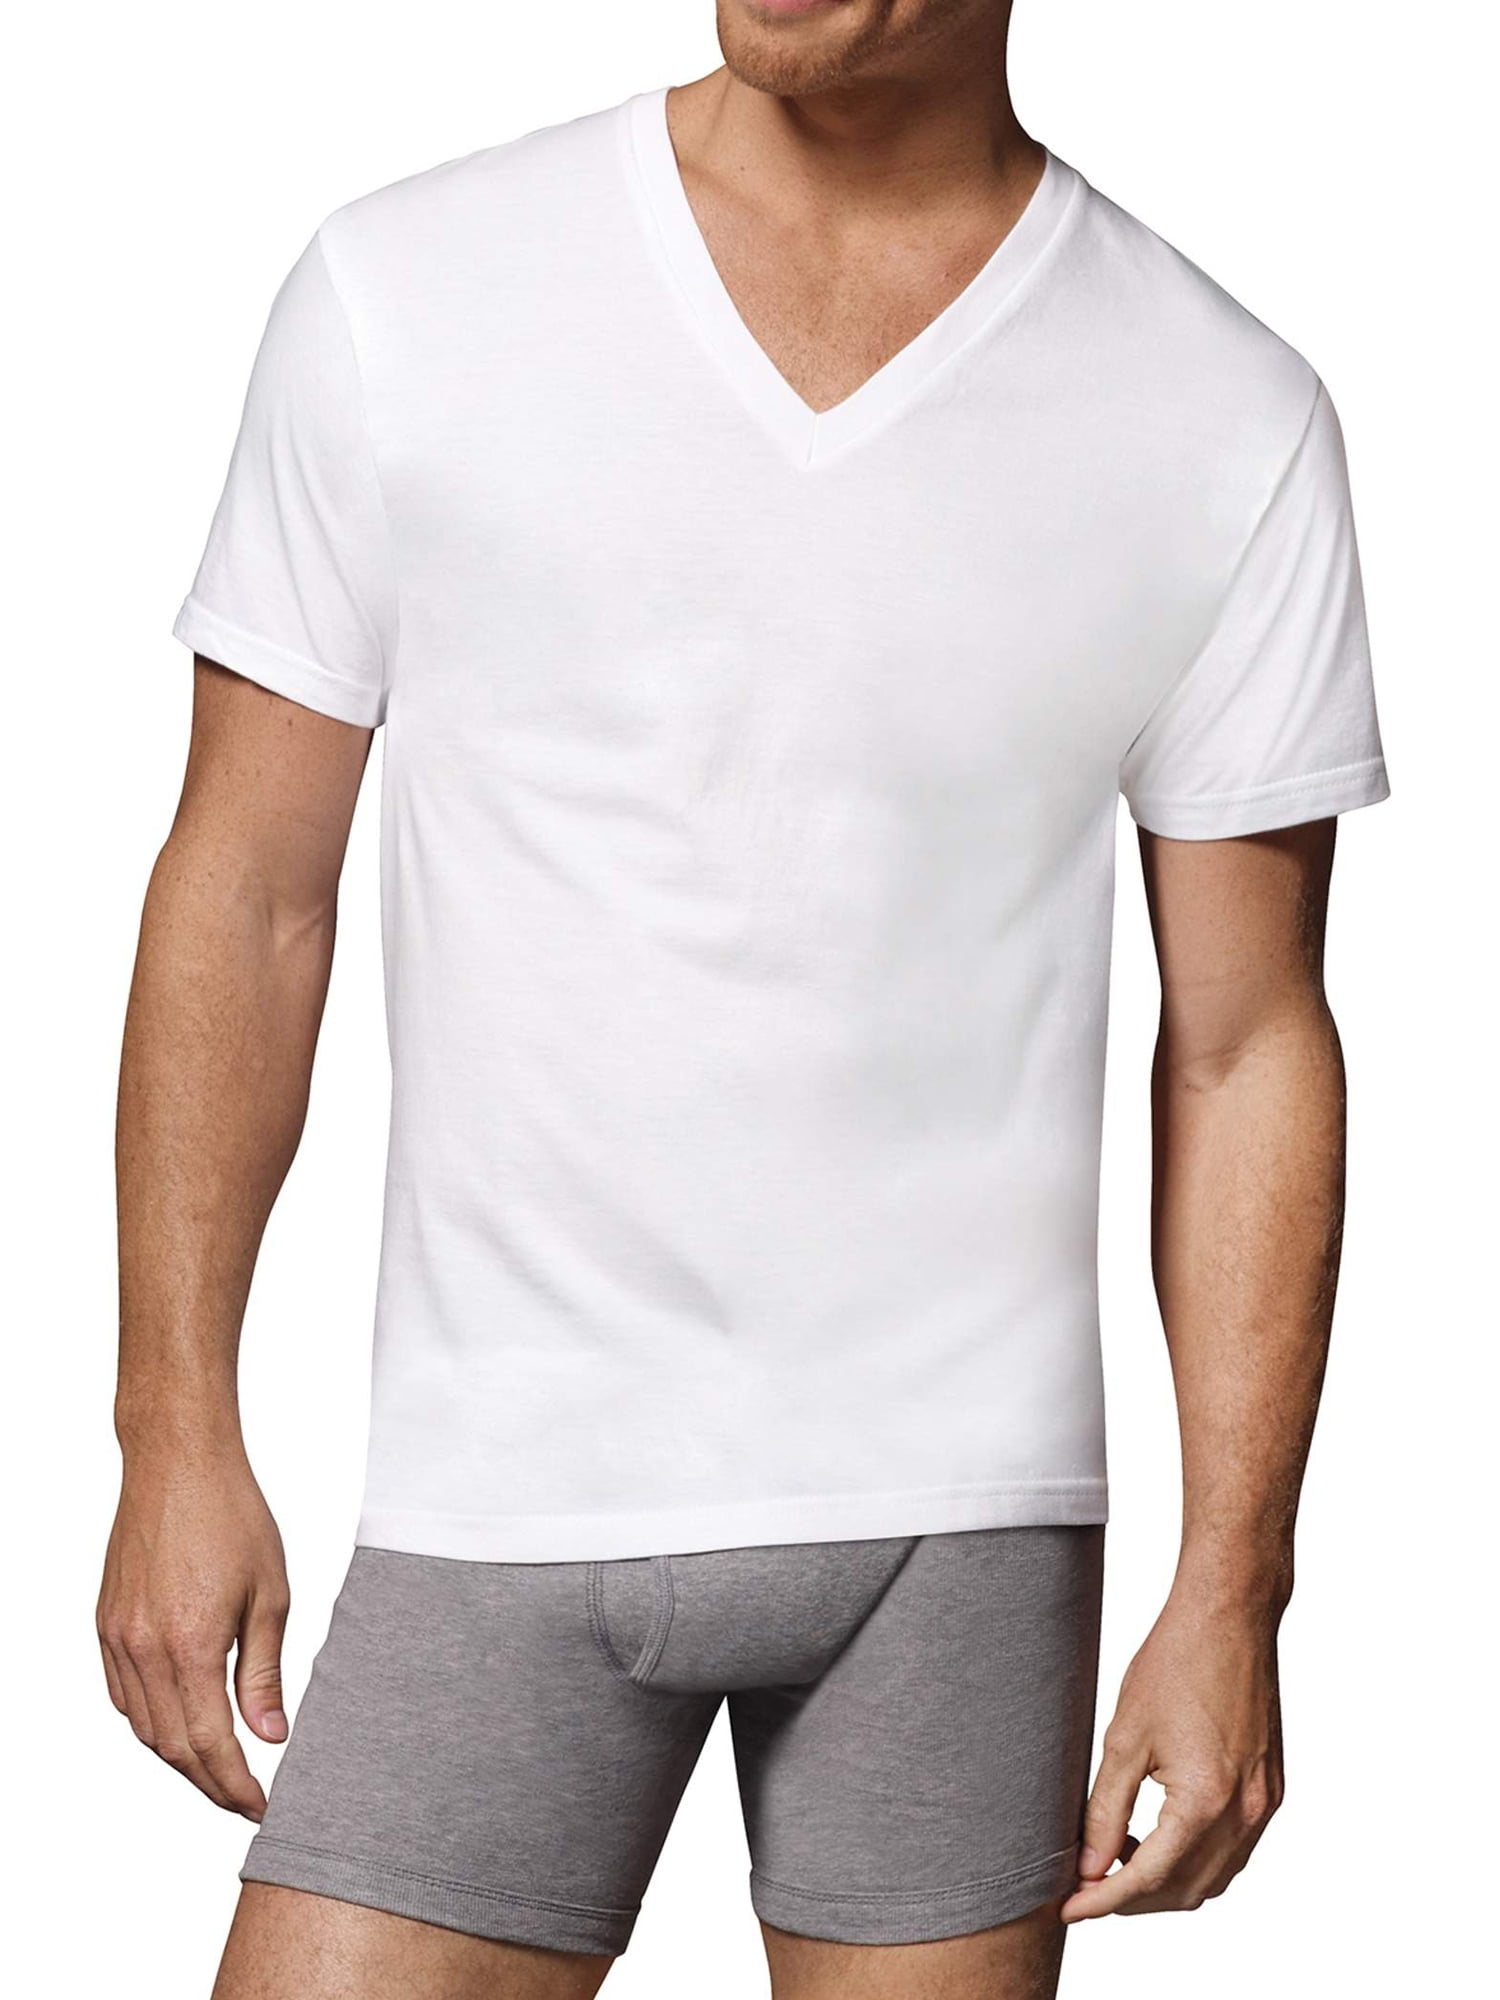 New 3-6 Pack Mens 100% Cotton Tagless V-Neck T-Shirt Undershirt Tee White S-XL